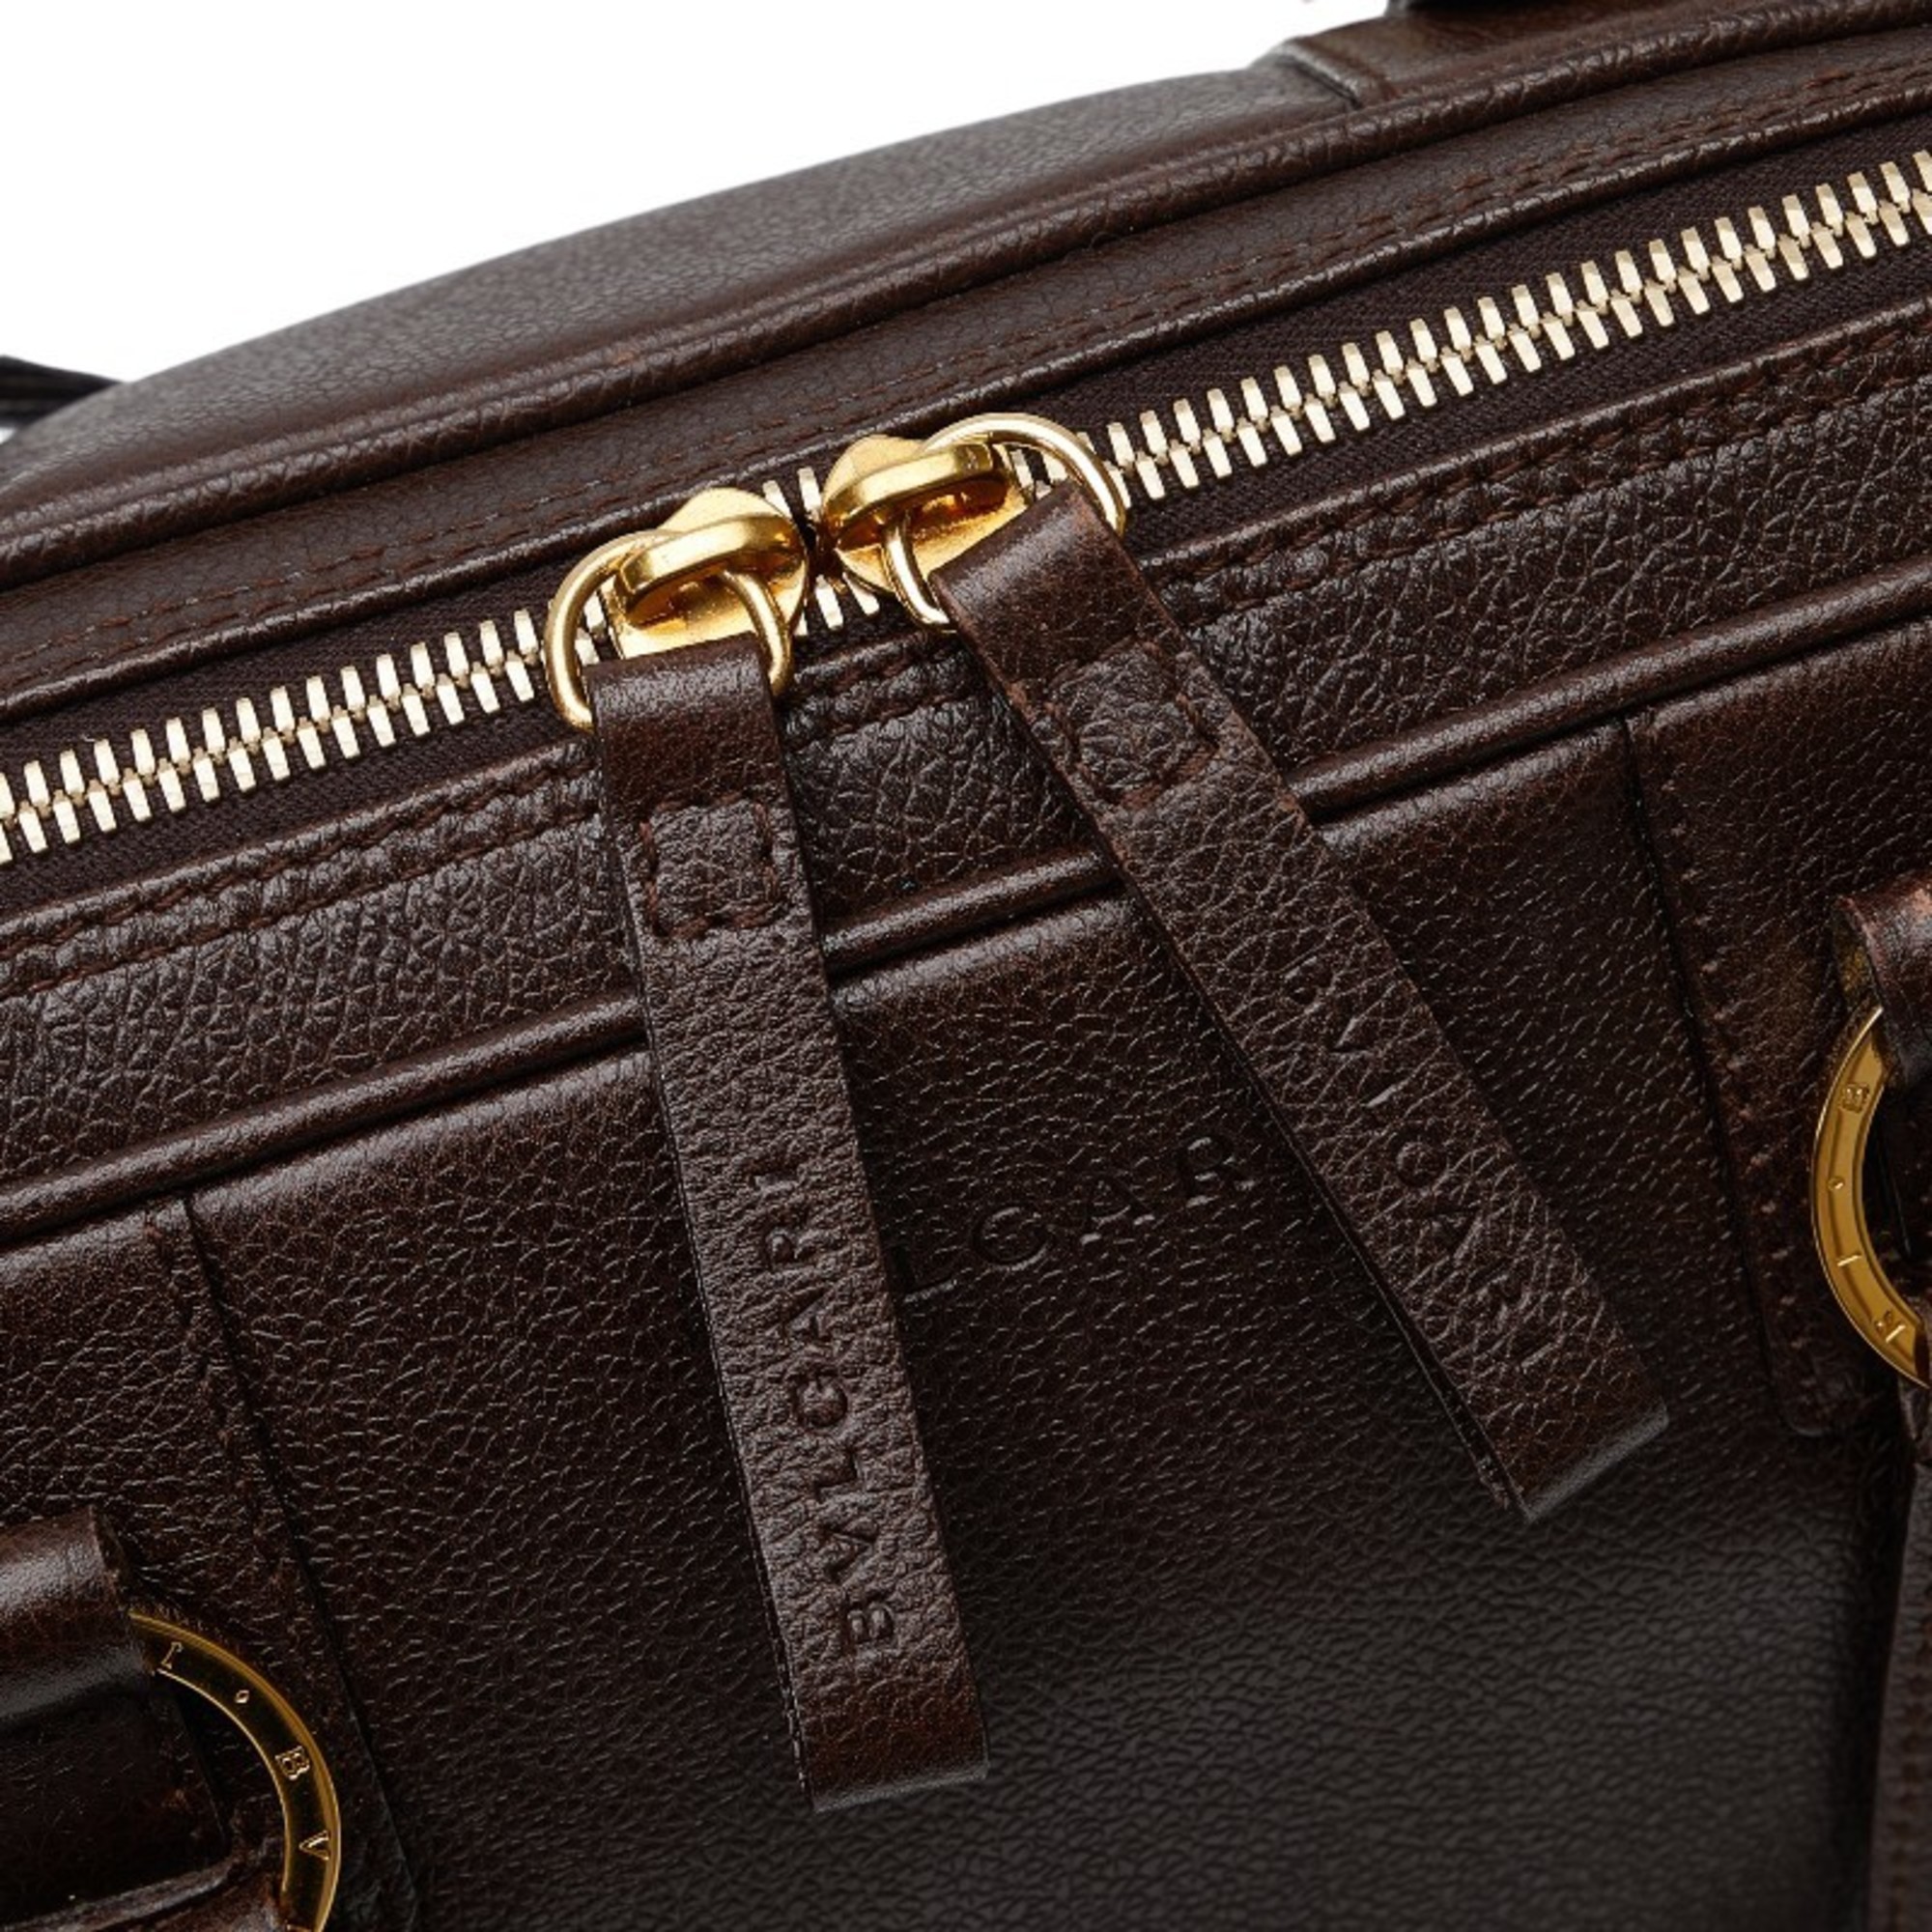 BVLGARI Handbag Tote Bag Brown Gold Leather Women's